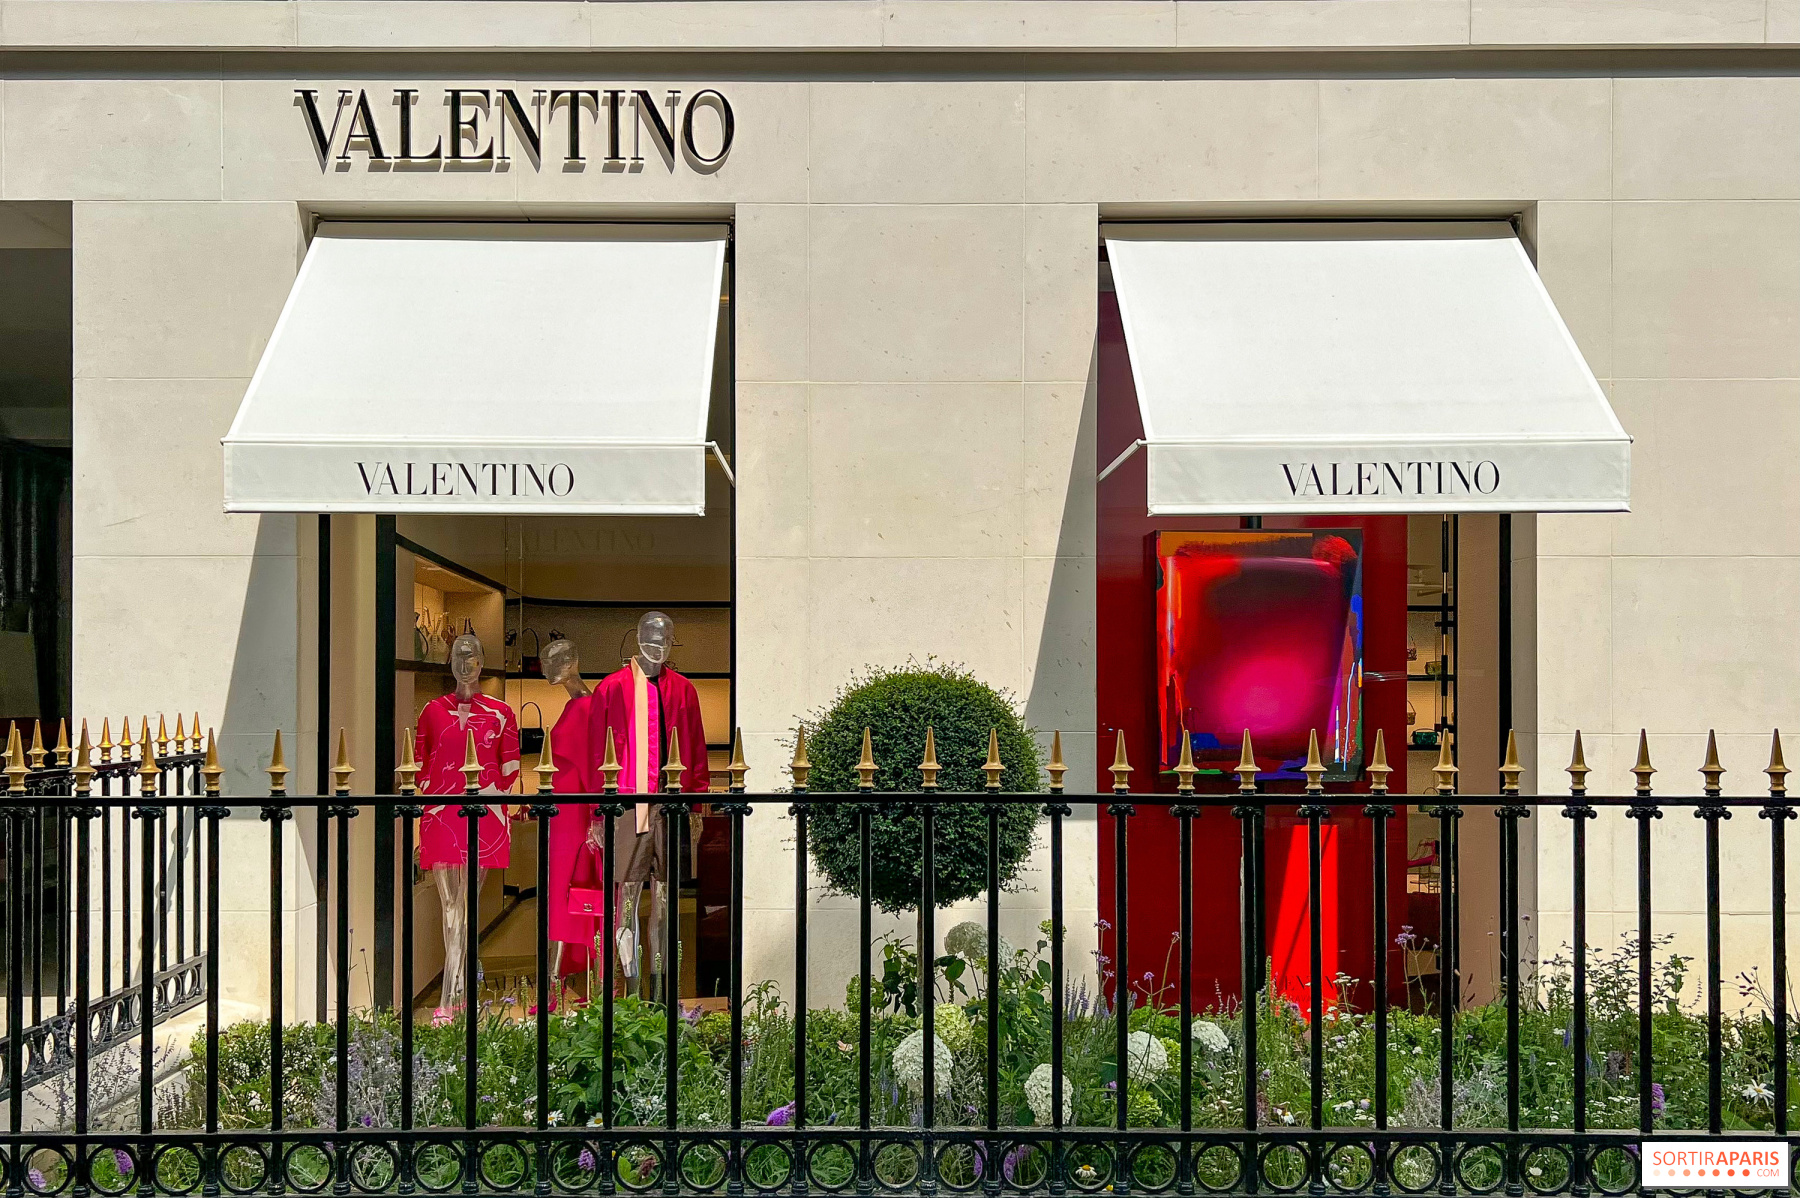 Souvenirs, Instagram Style, at Louis Vuitton, Valentino, Rick